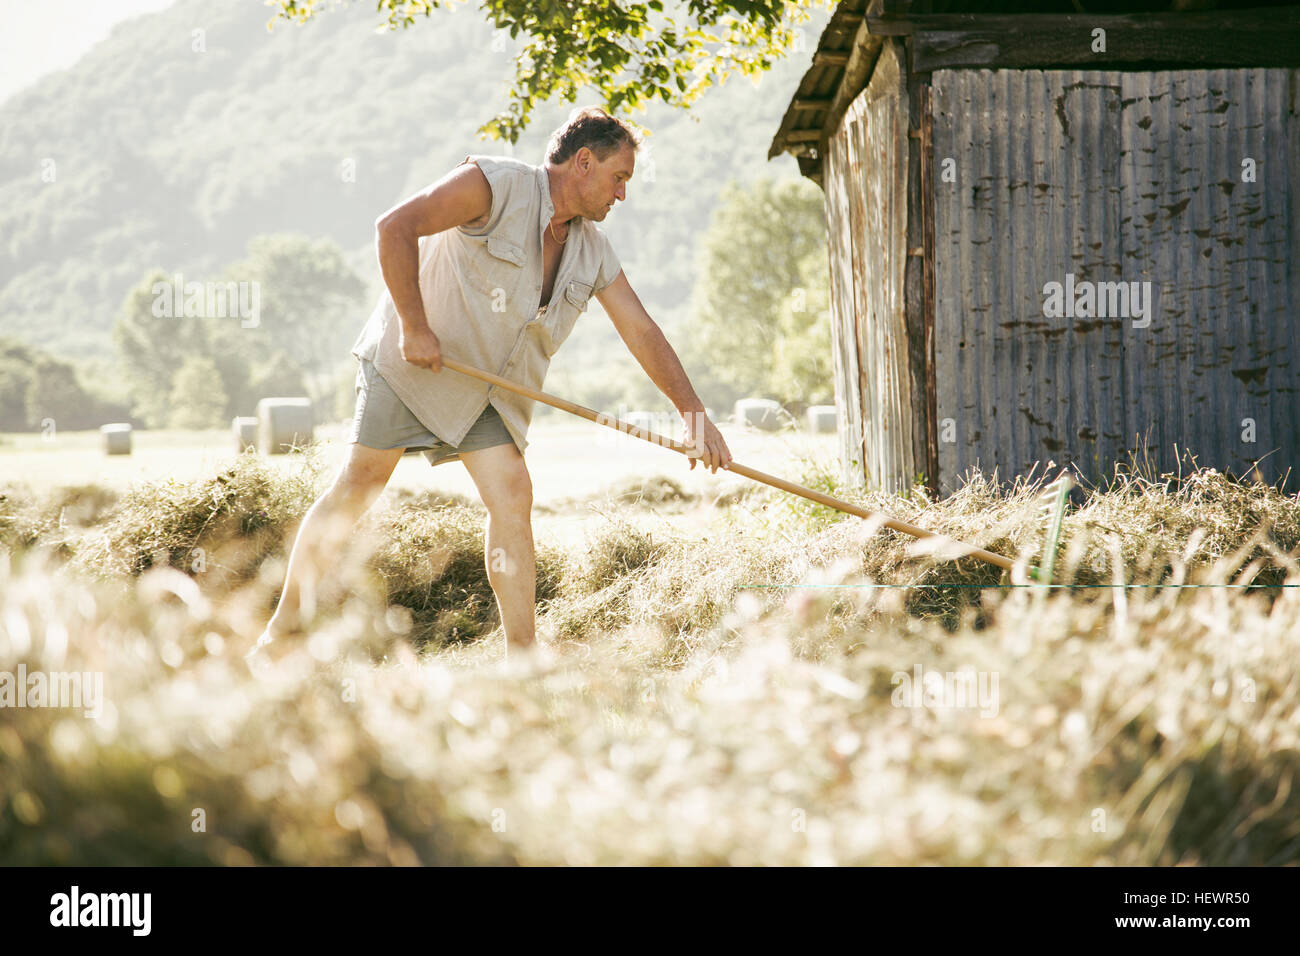 Mature male farmworker raking harvest in field Stock Photo